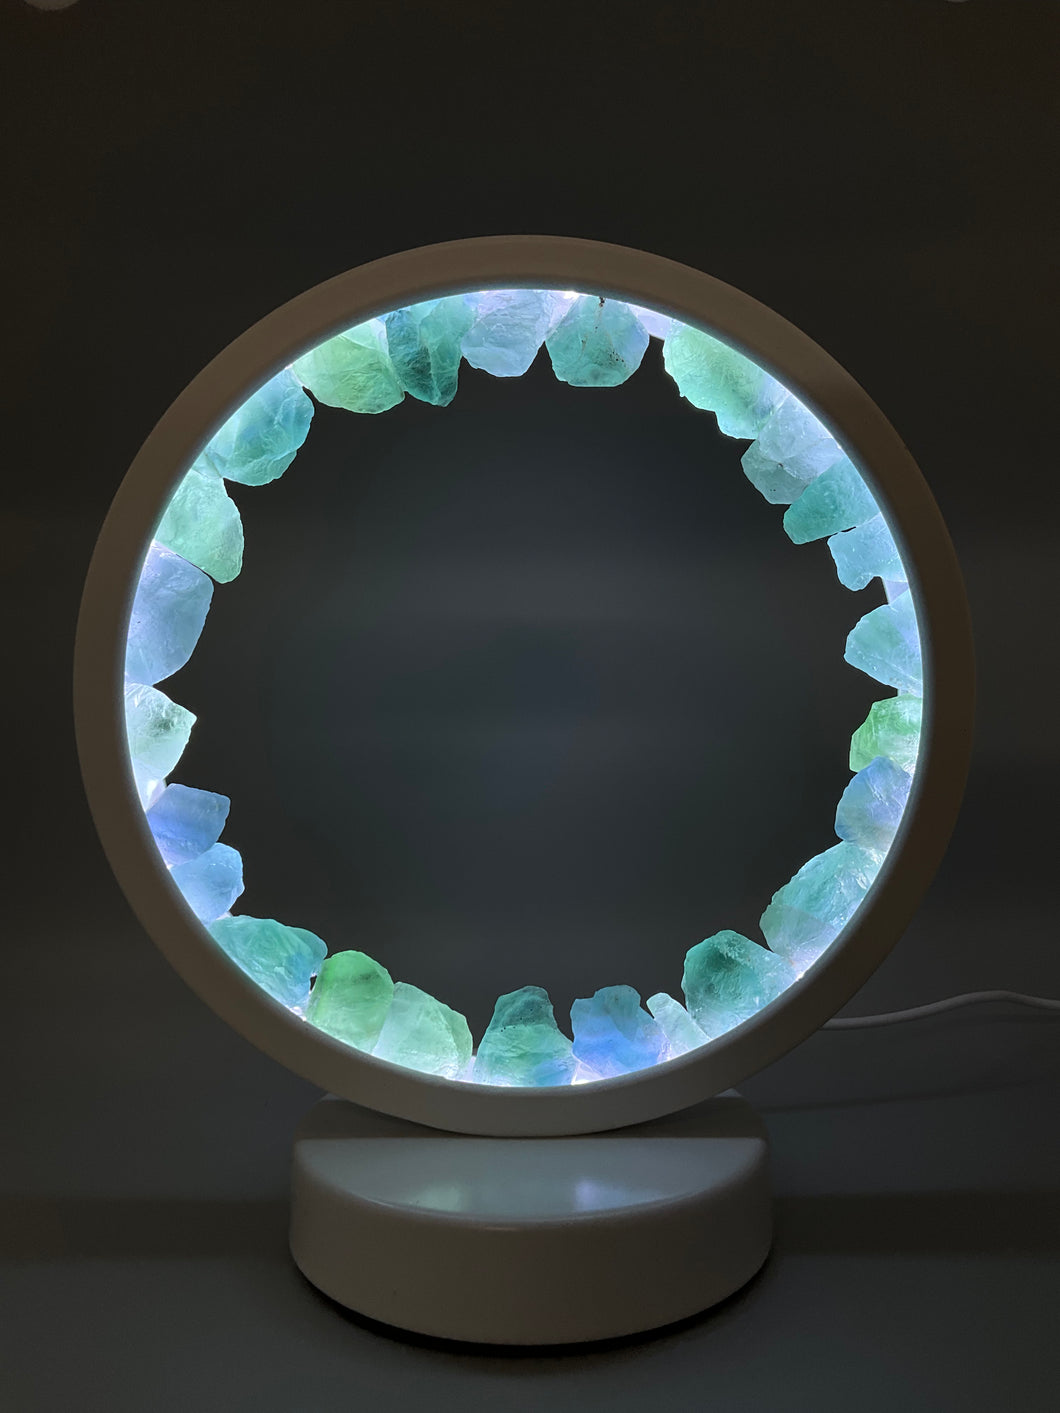 Blue Fluorite Crystal Healing Night Light